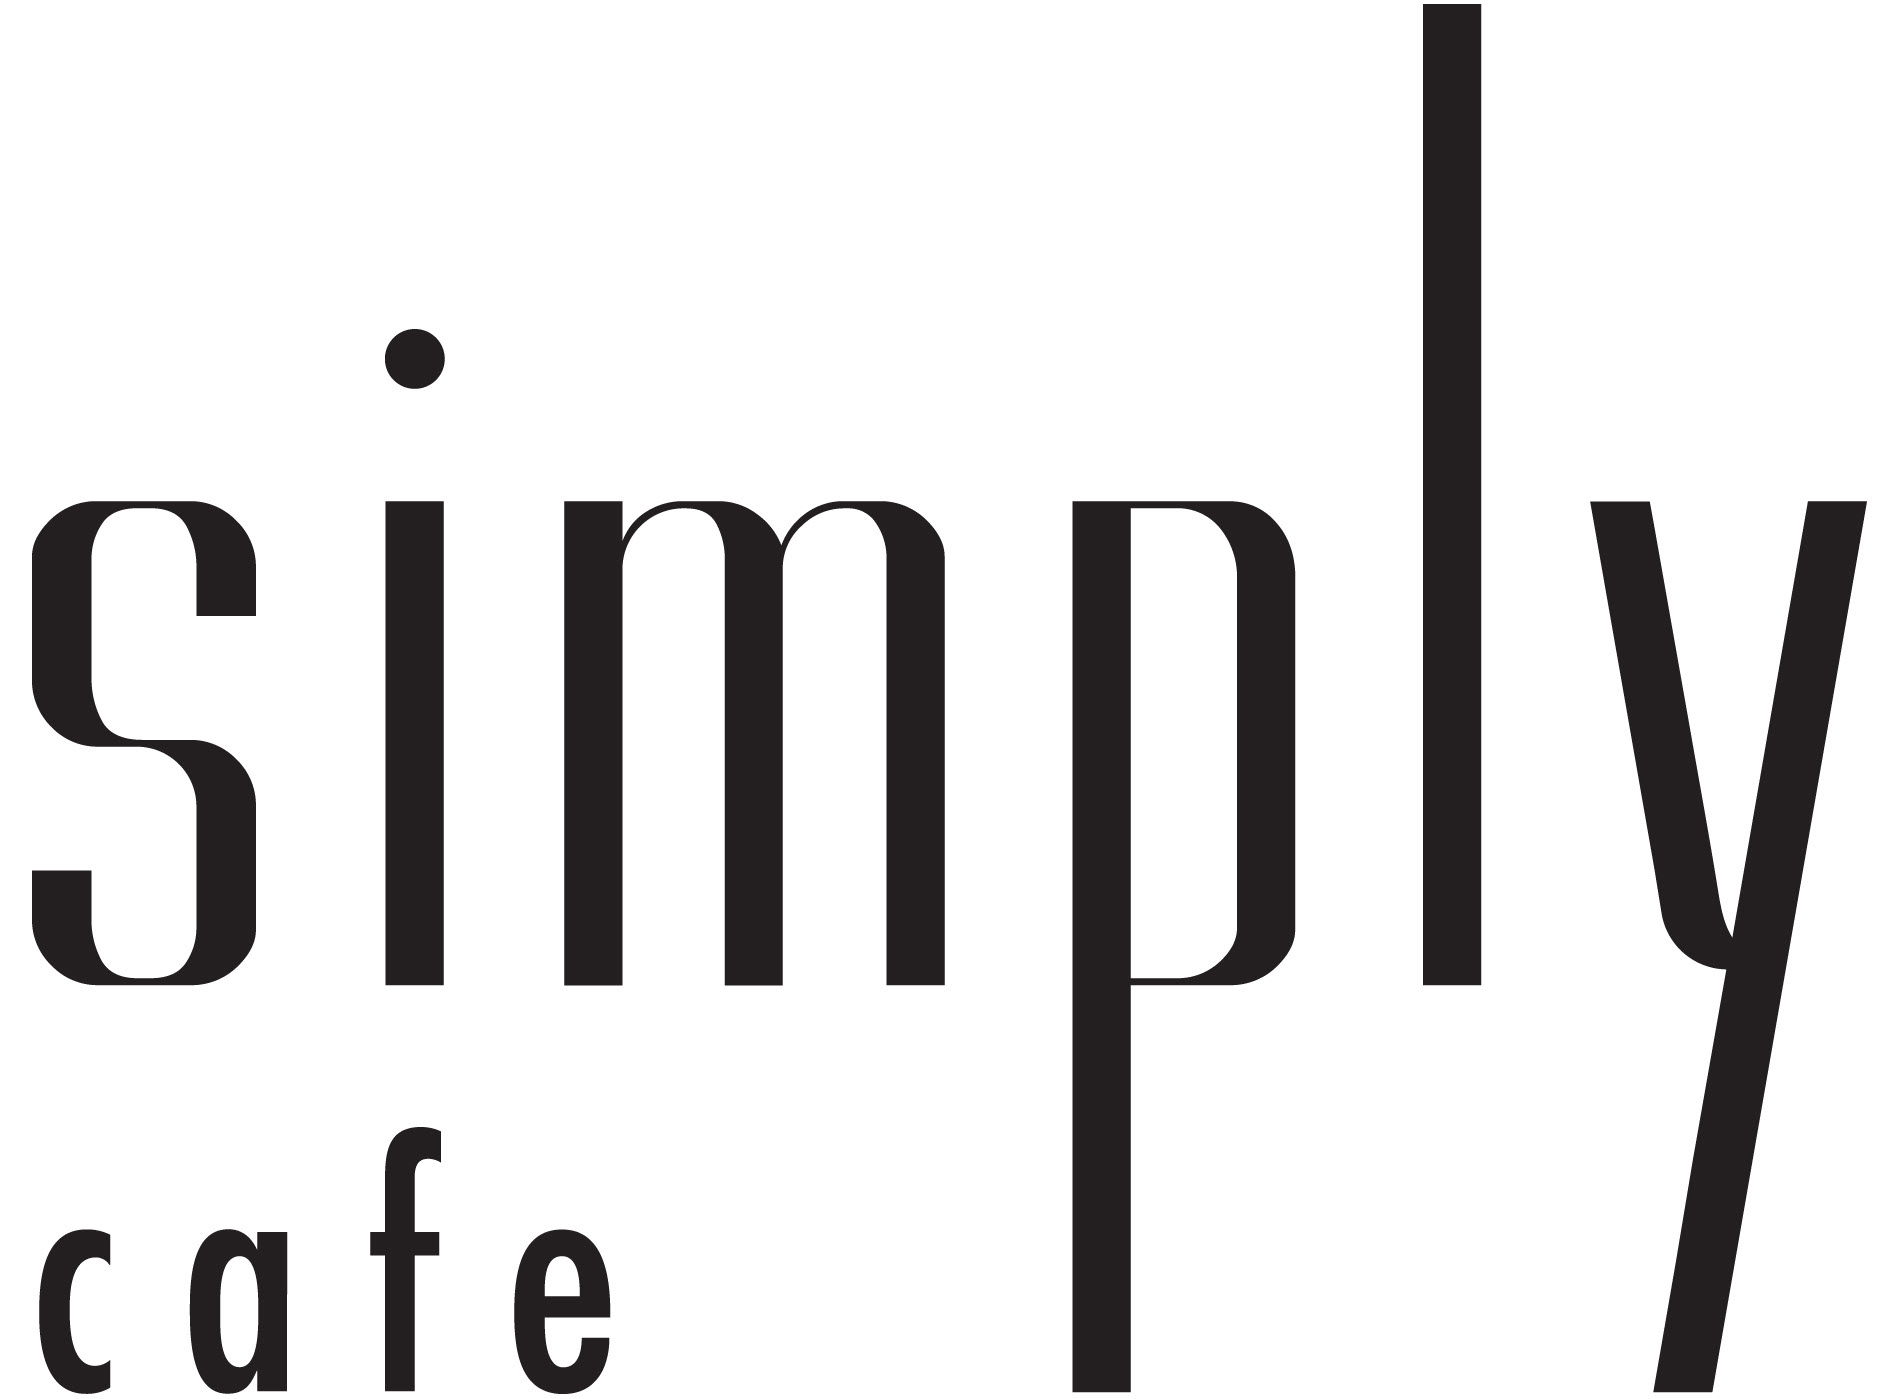 Simply Cafe